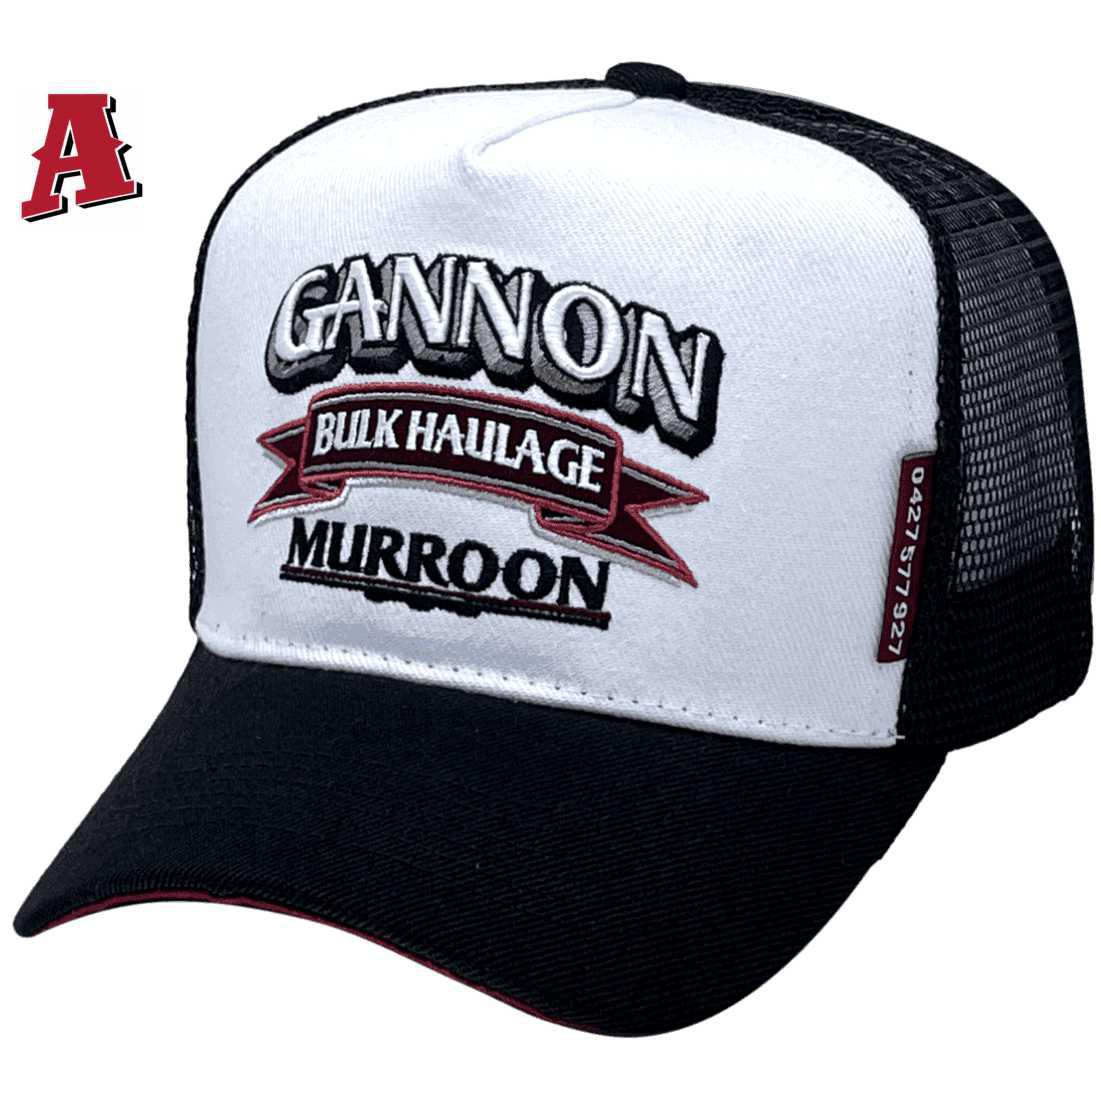 Gannon Bulk Haulage Murroon Vic Basic Aussie Trucker Hats with Australian Head Fit Crown